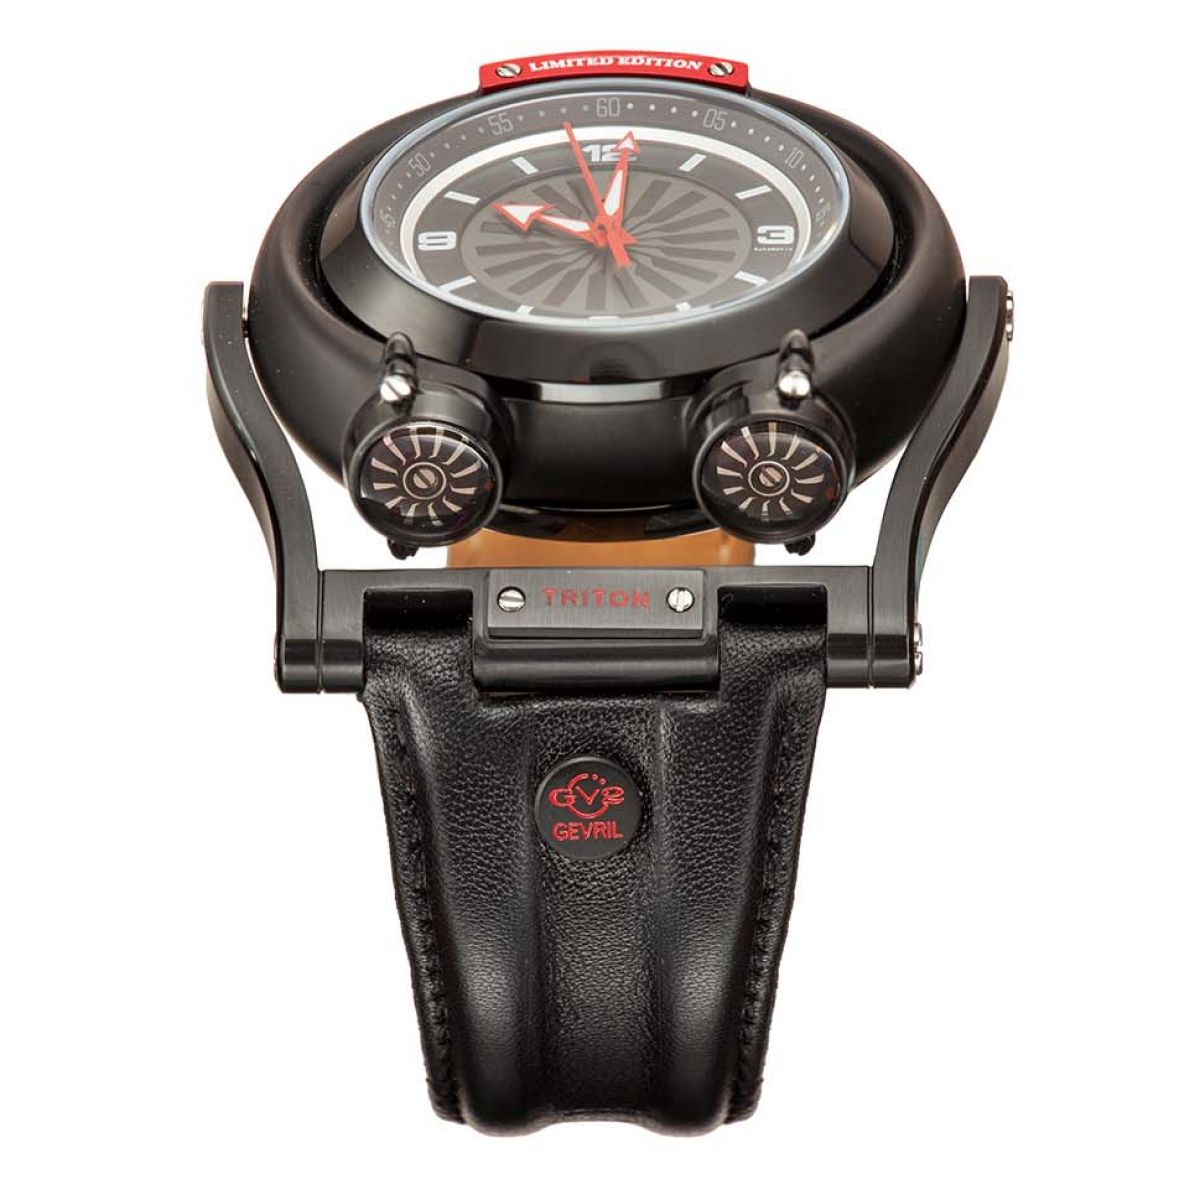 Gevril GV2 Triton Men's Black Dial Calfskin Leather Watch 3401 Heren Horloge